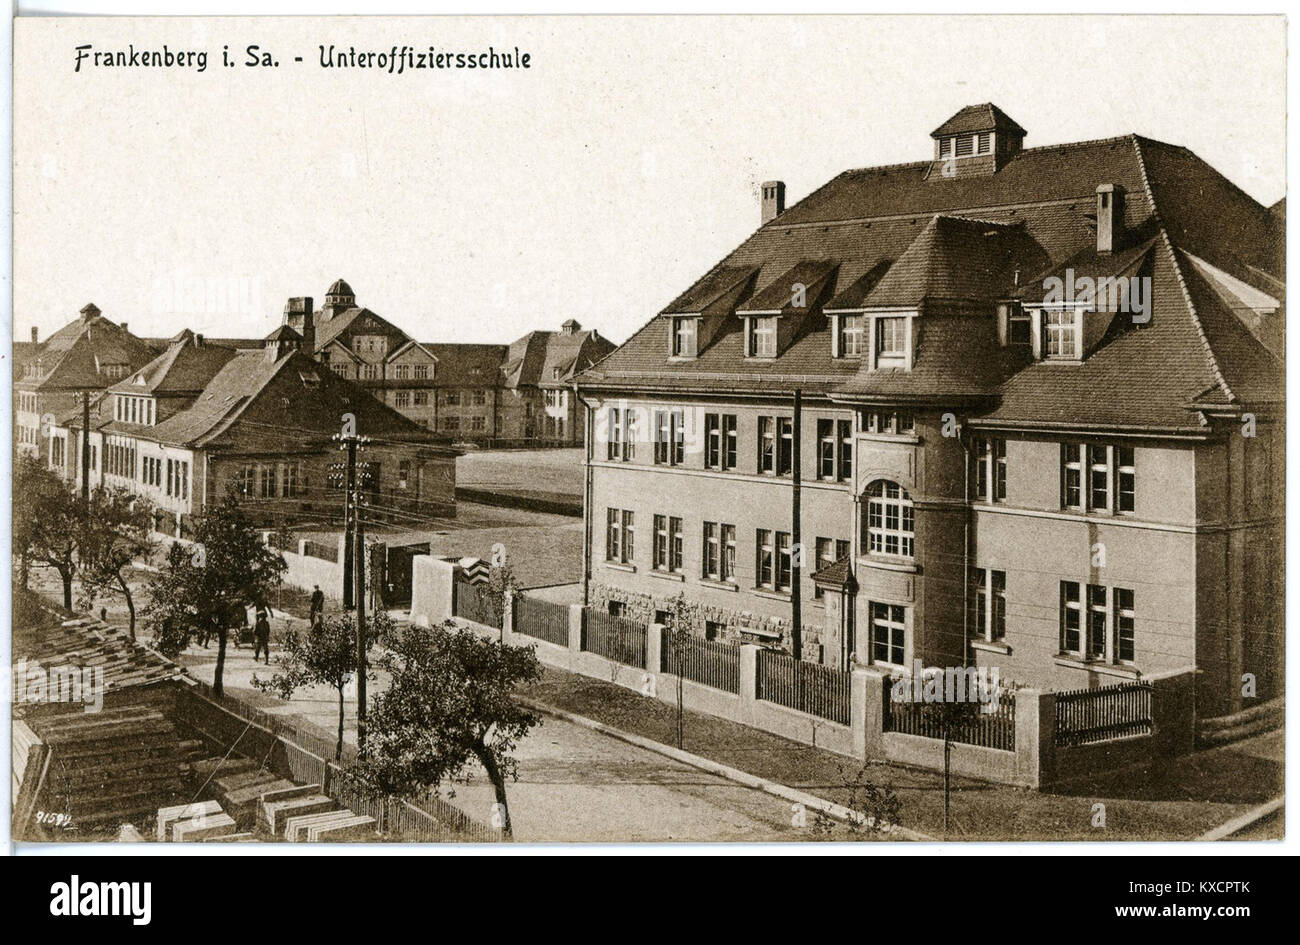 20658 - Frankenberg 1917 - Unteroffiziersschule-Brück&Sohn Kunstverlag Stockfoto